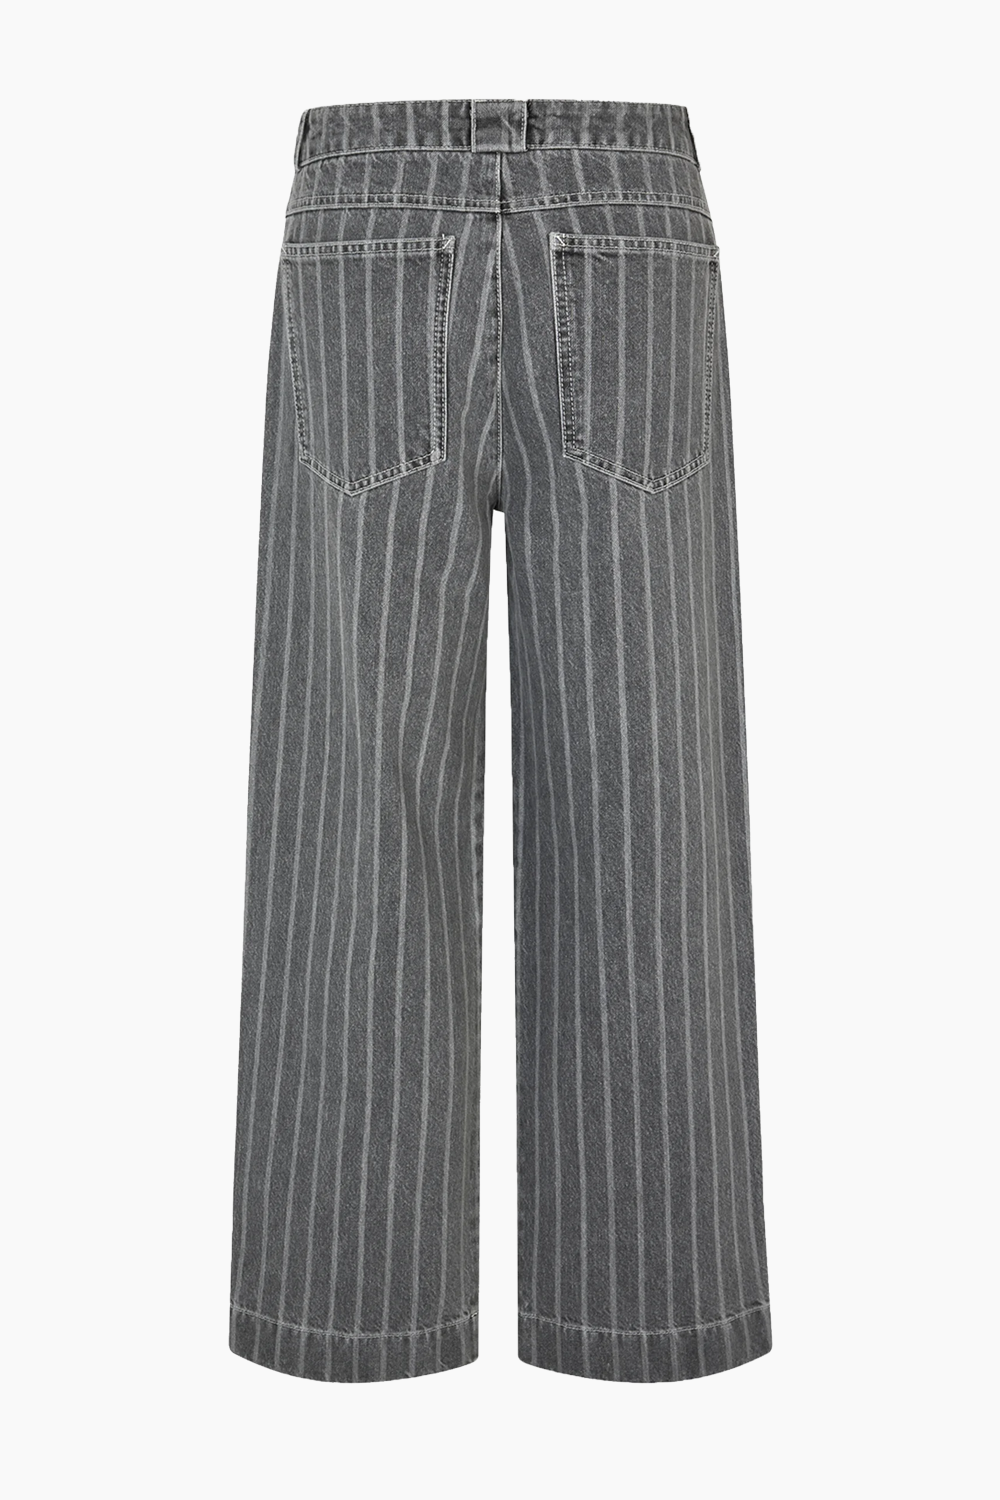 Krauer Jeans - Grey Stripe Denim - Mads Nørgaard